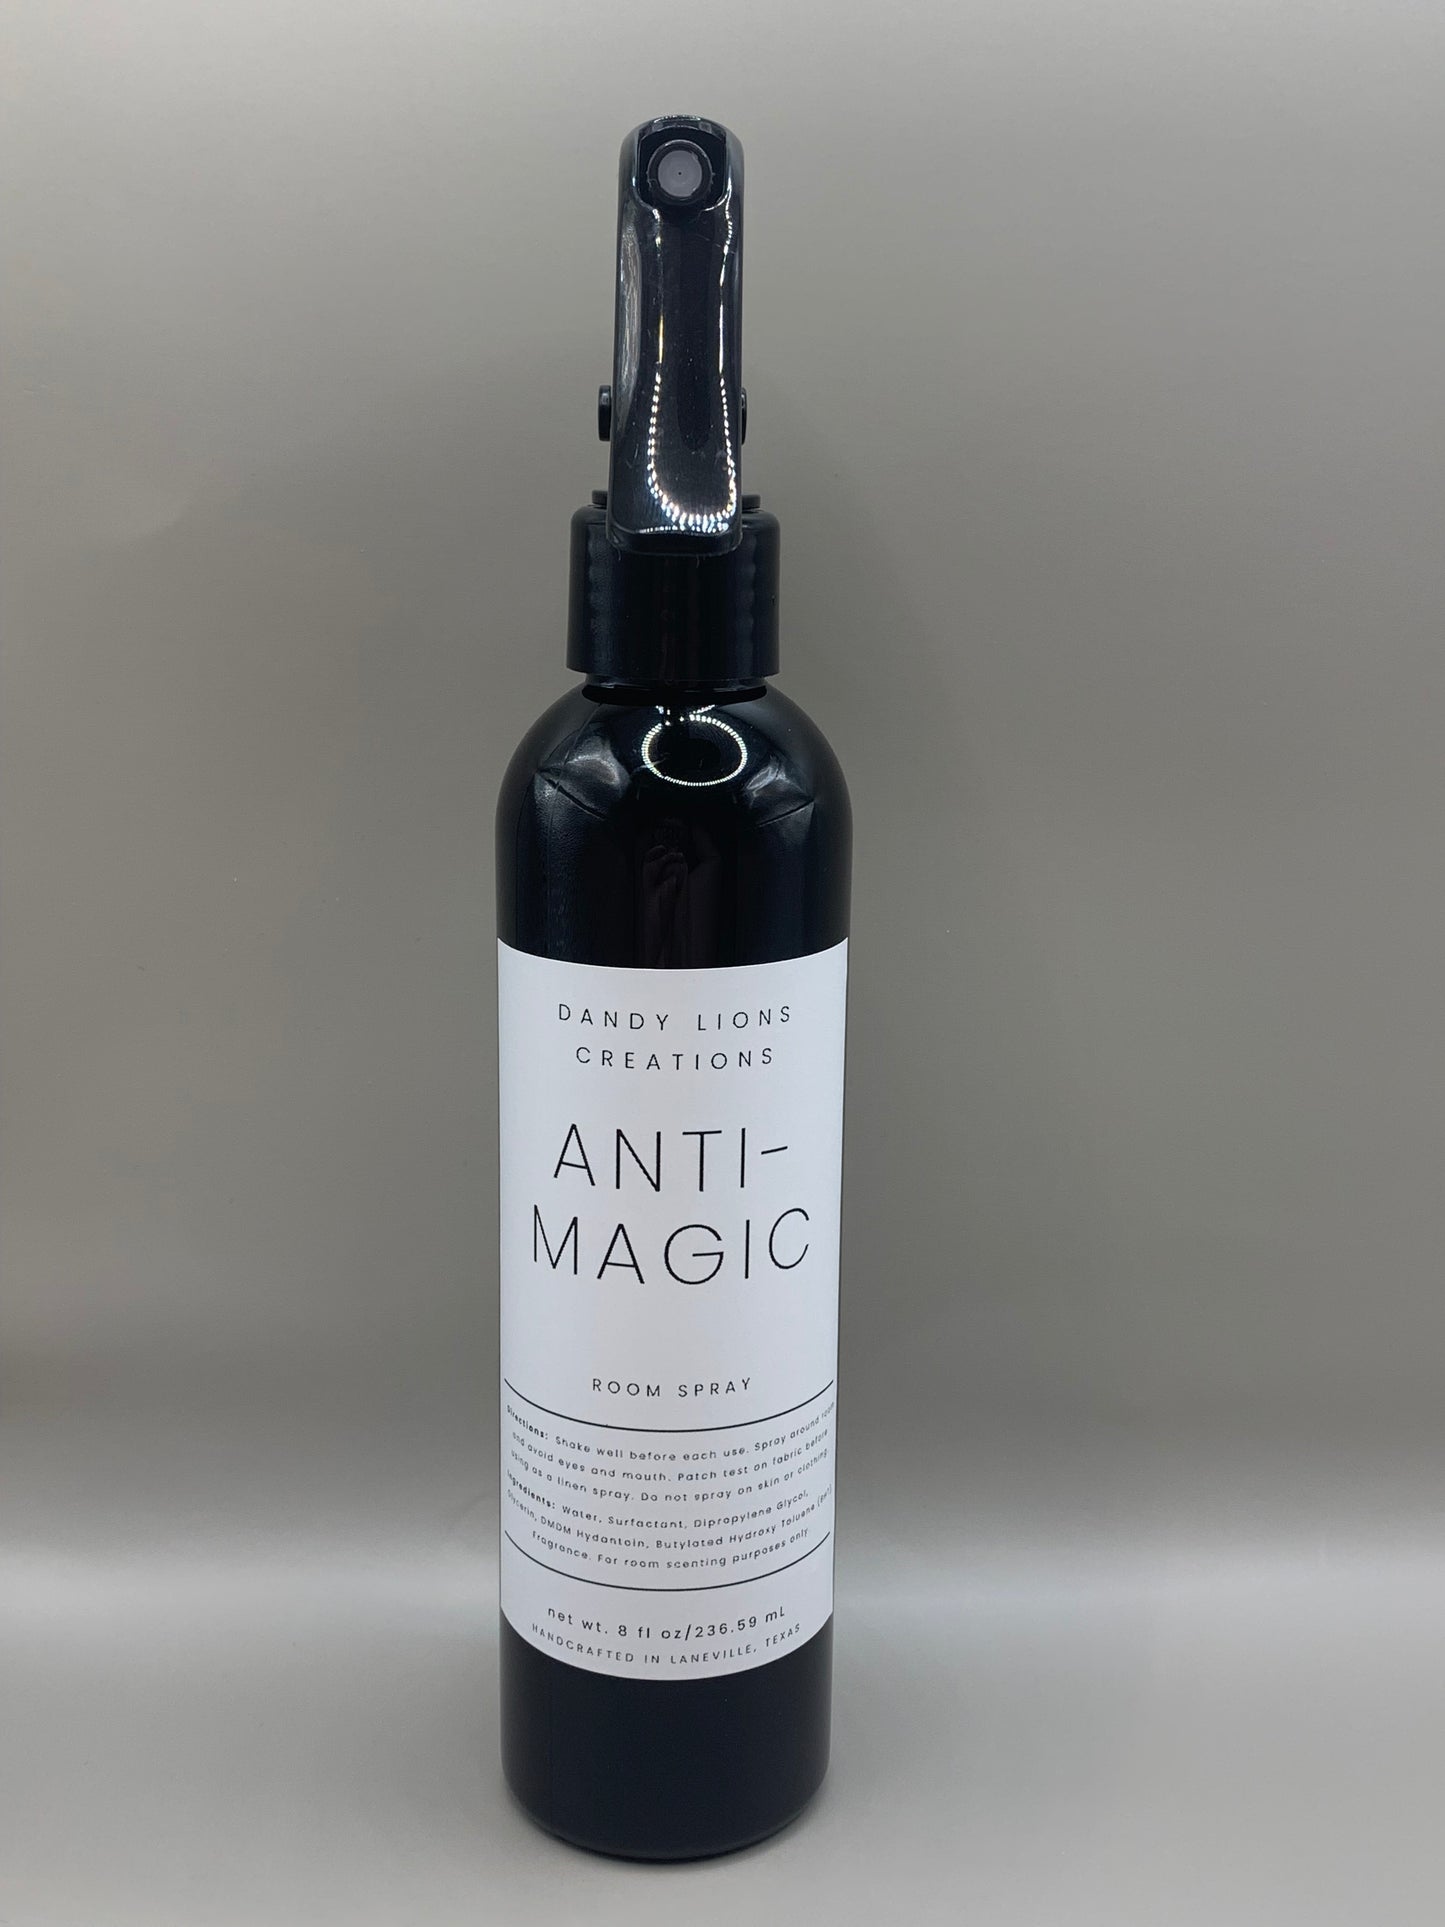 Anti-Magic room spray